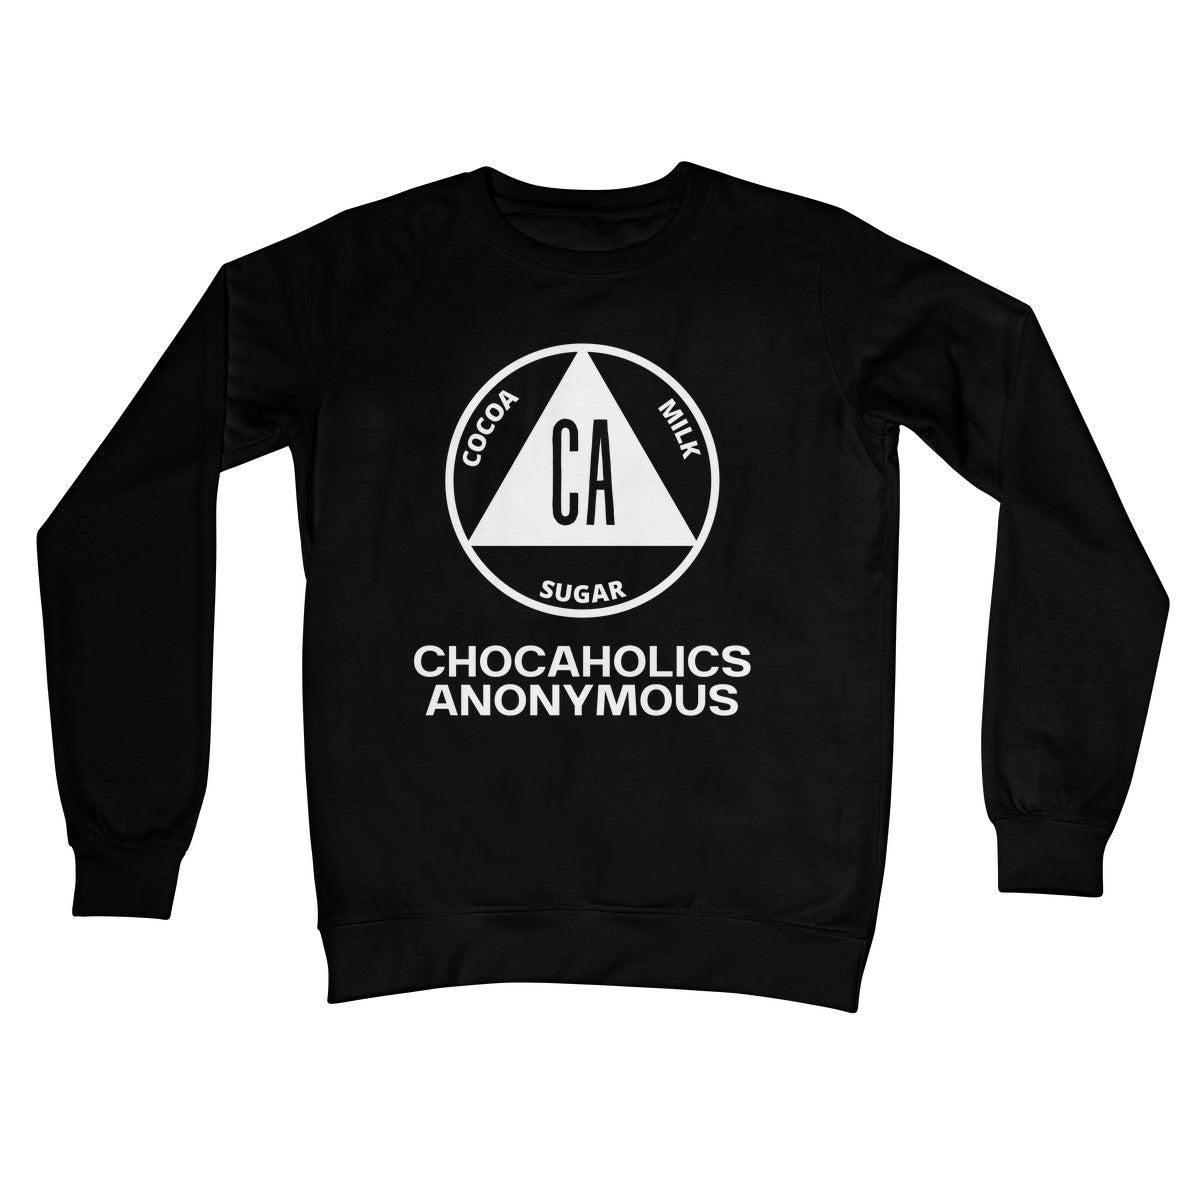 chocaholics anonymous jumper black